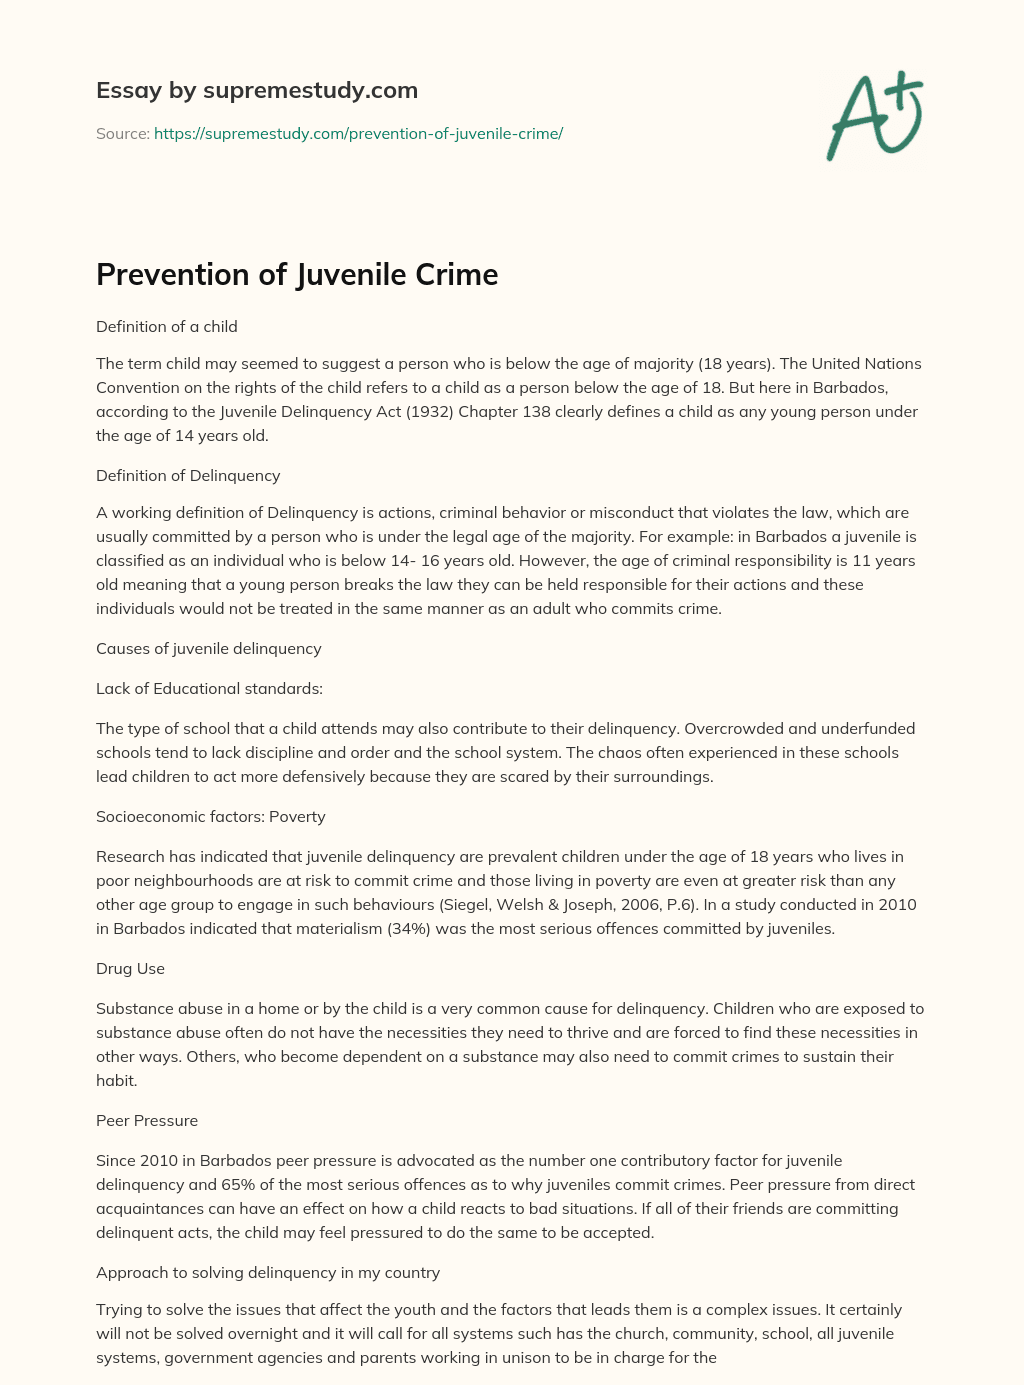 Prevention of Juvenile Crime essay